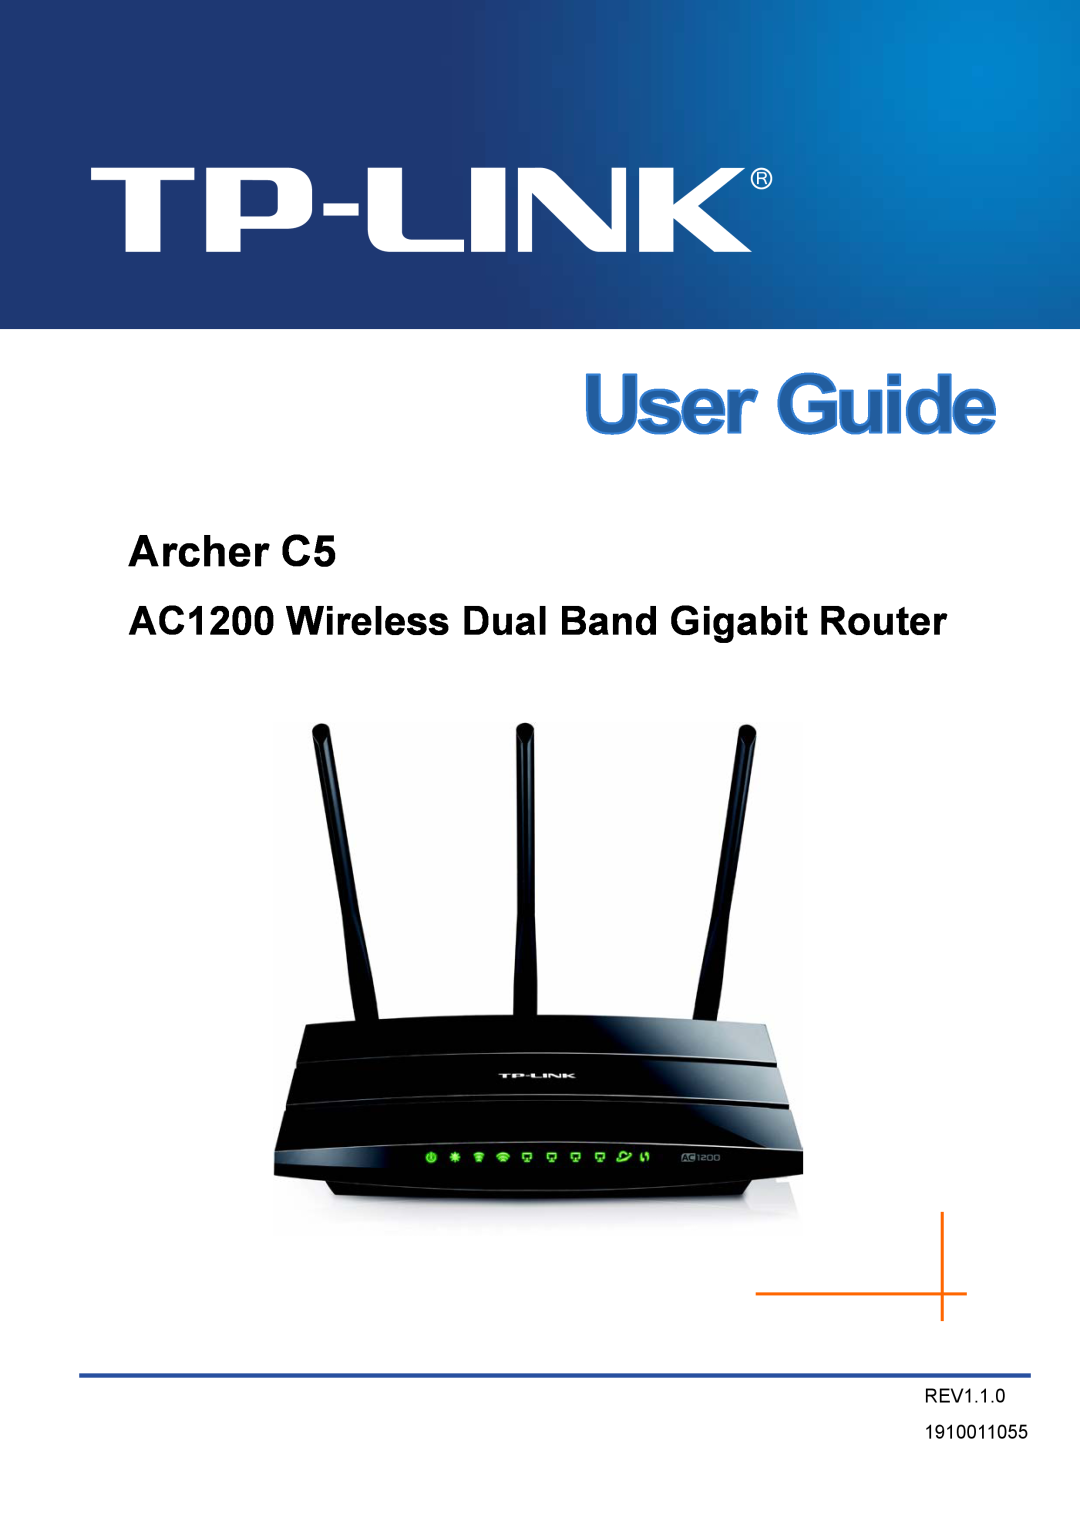 TP-Link manual AC1200 Wireless Dual Band Gigabit Router, Archer C5 